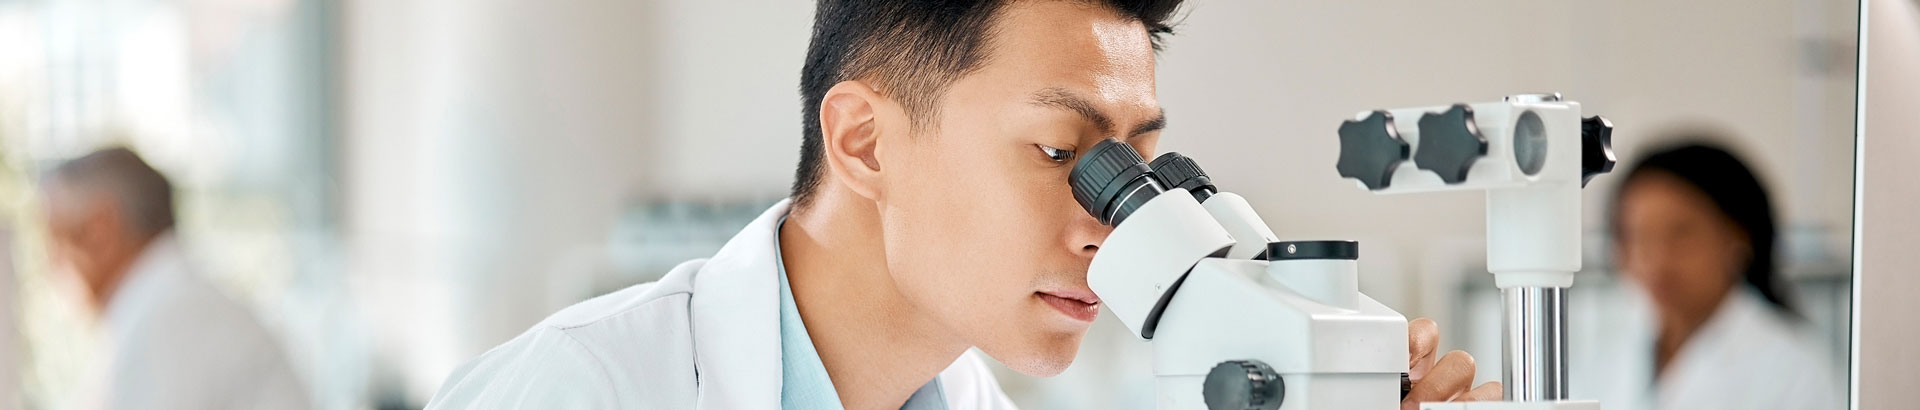 Bayhealth employee looking in microscope